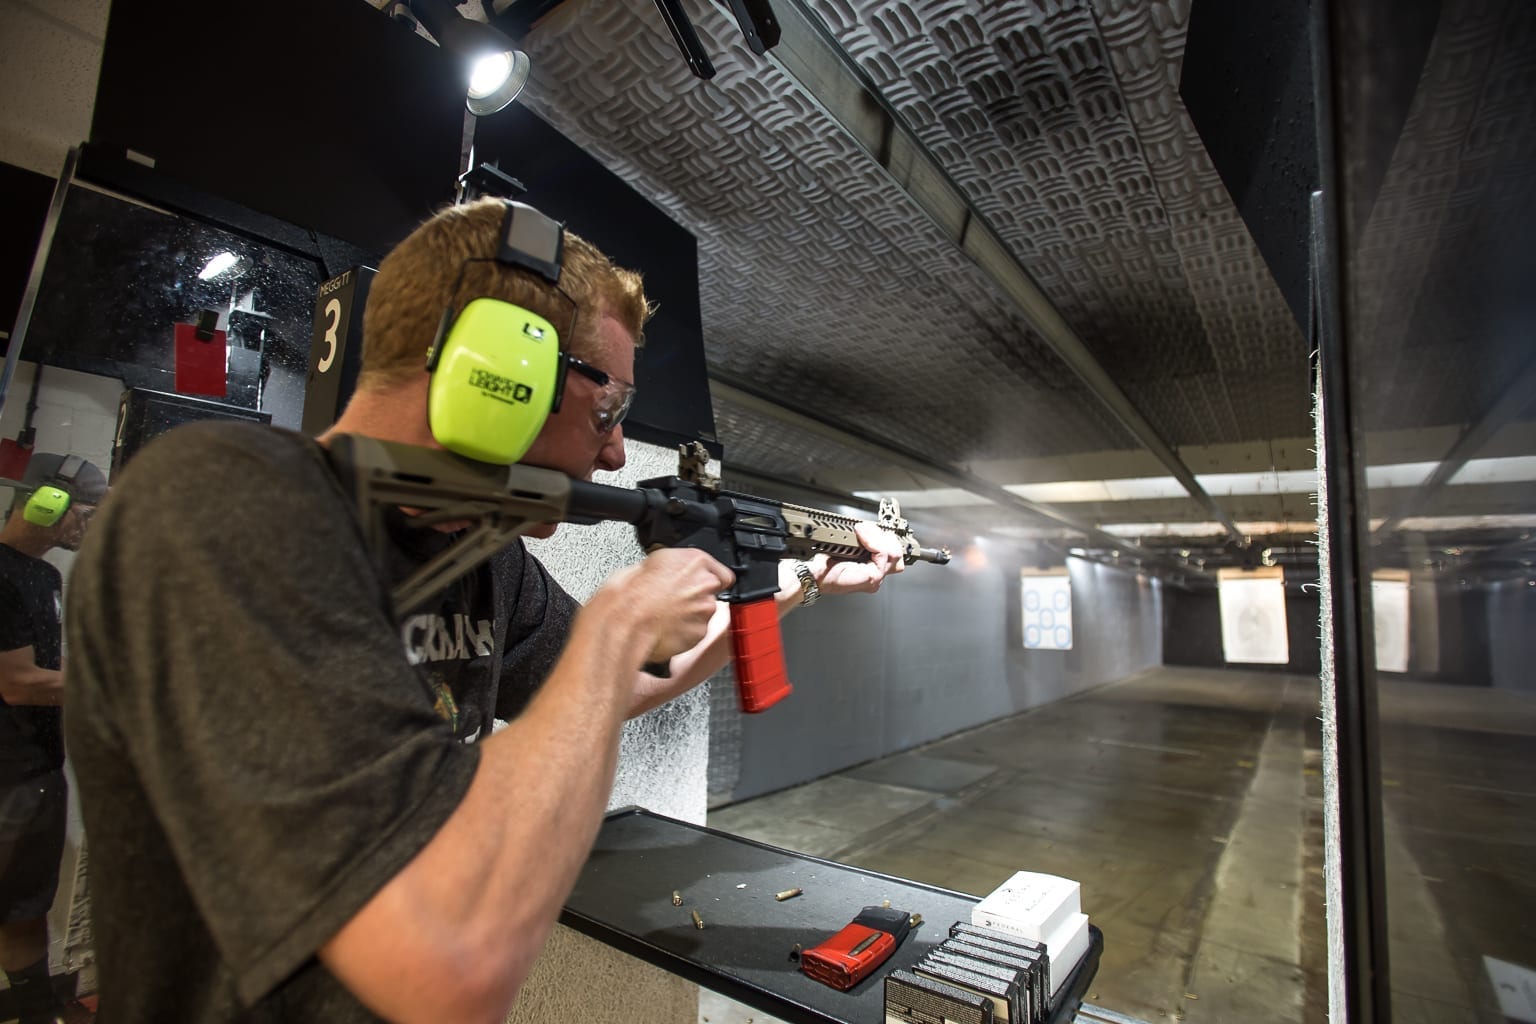 Denver Indoor Shooting Range Photos & Images.